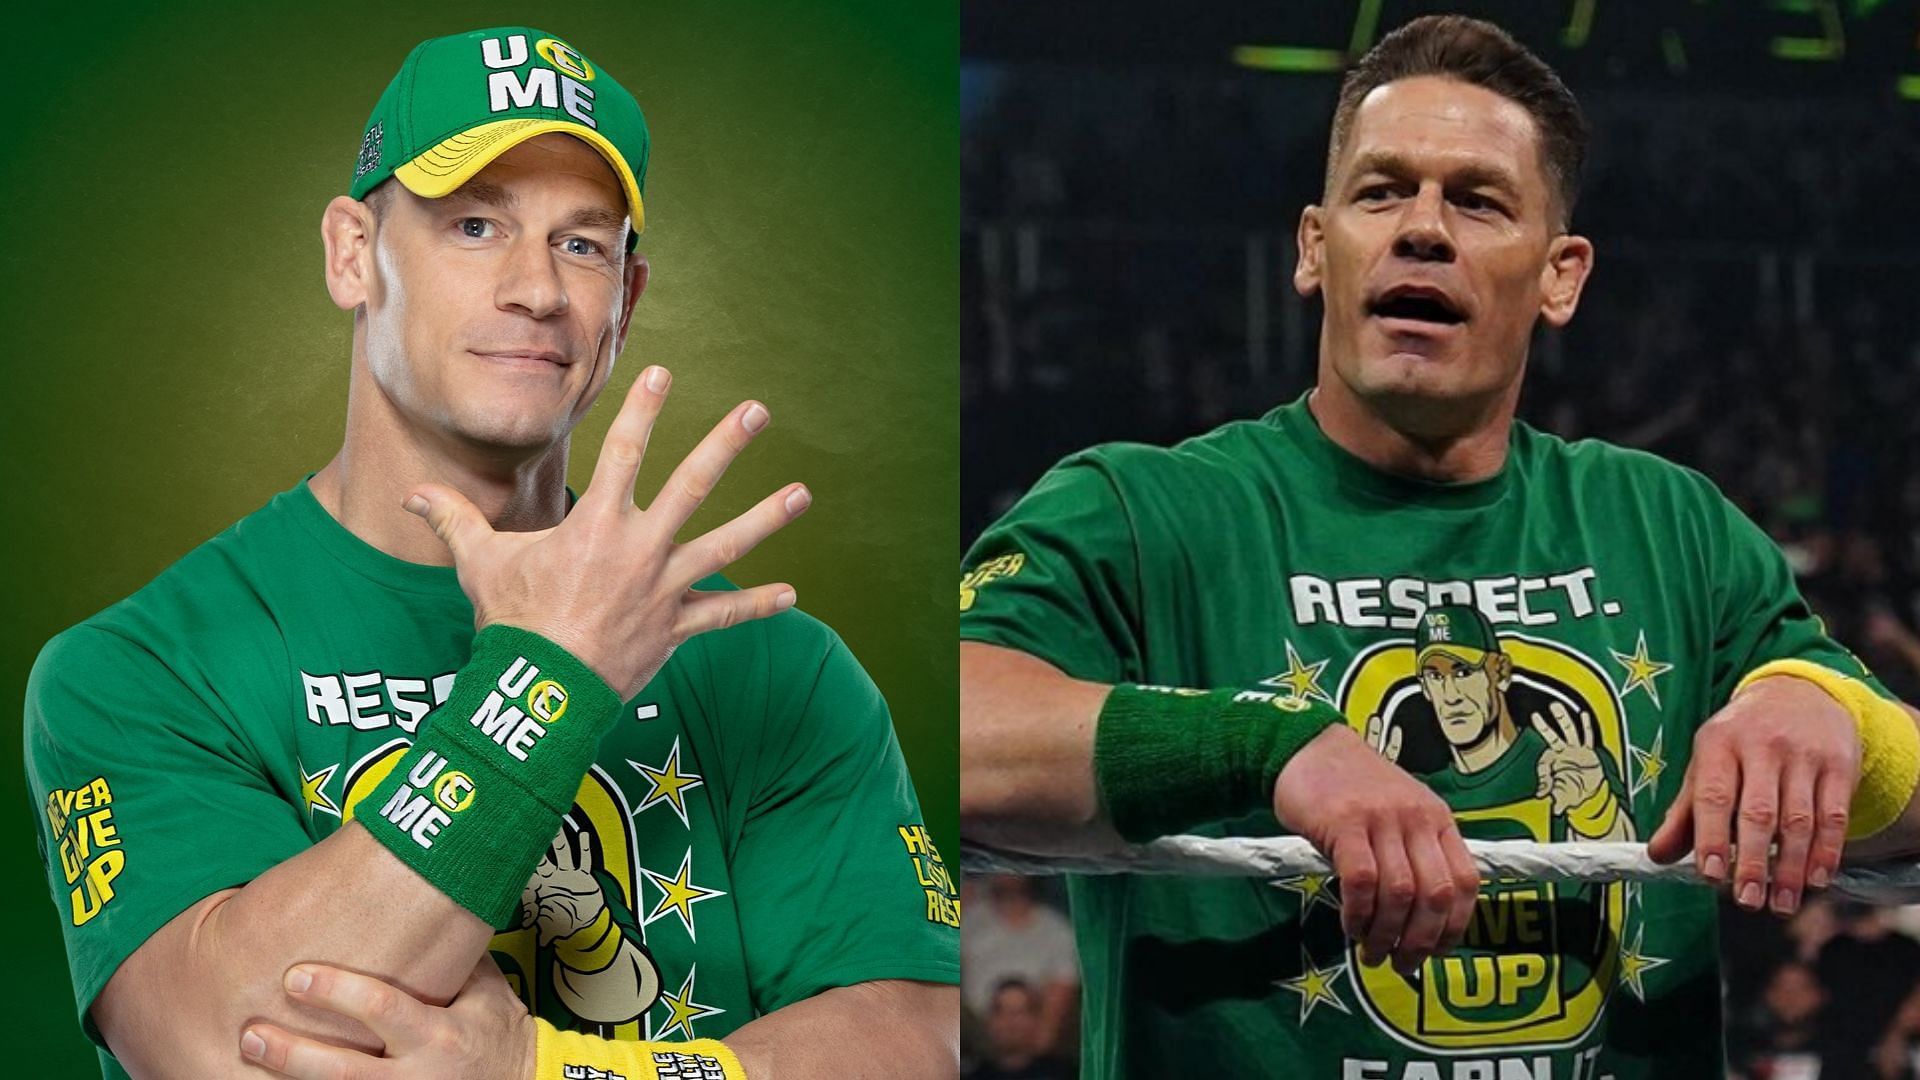 Cena recently returned to the company.